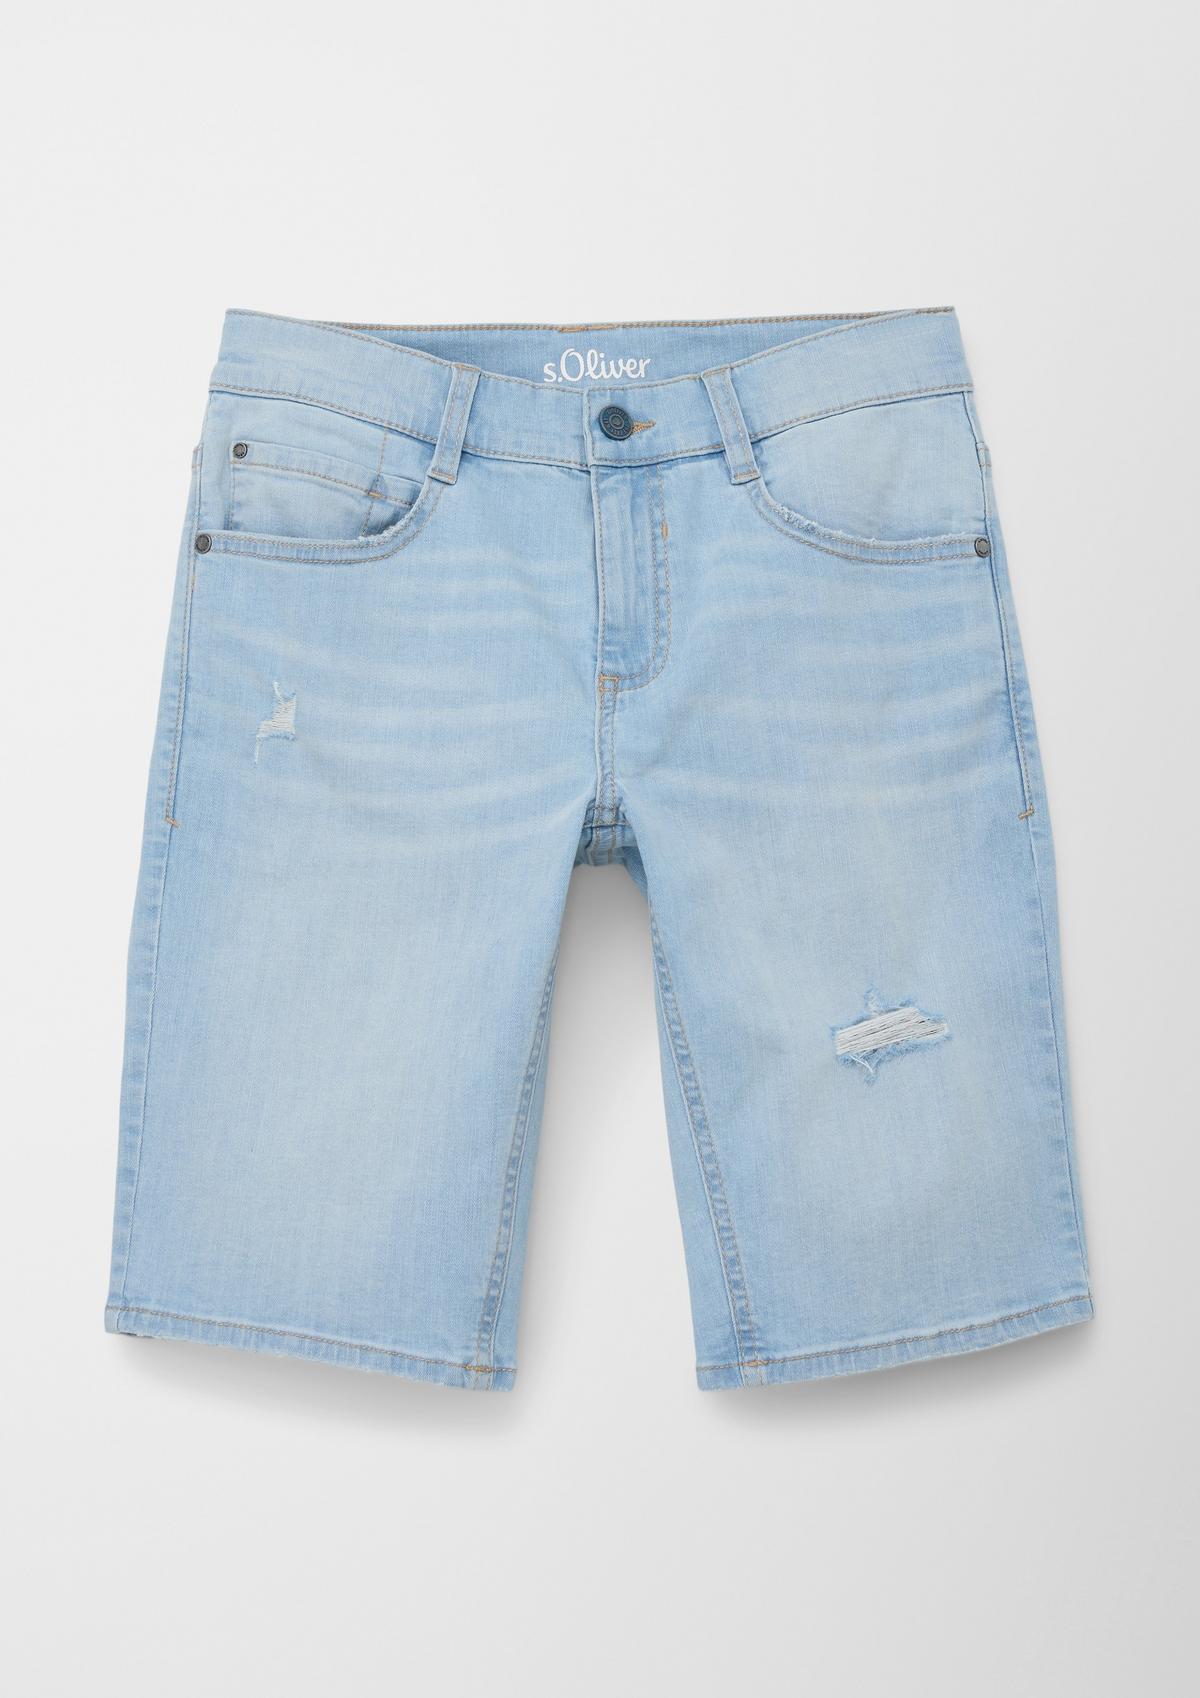 s.Oliver Jeans-Bermuda Seattle / Regular Fit / Mid Rise / Slim Leg